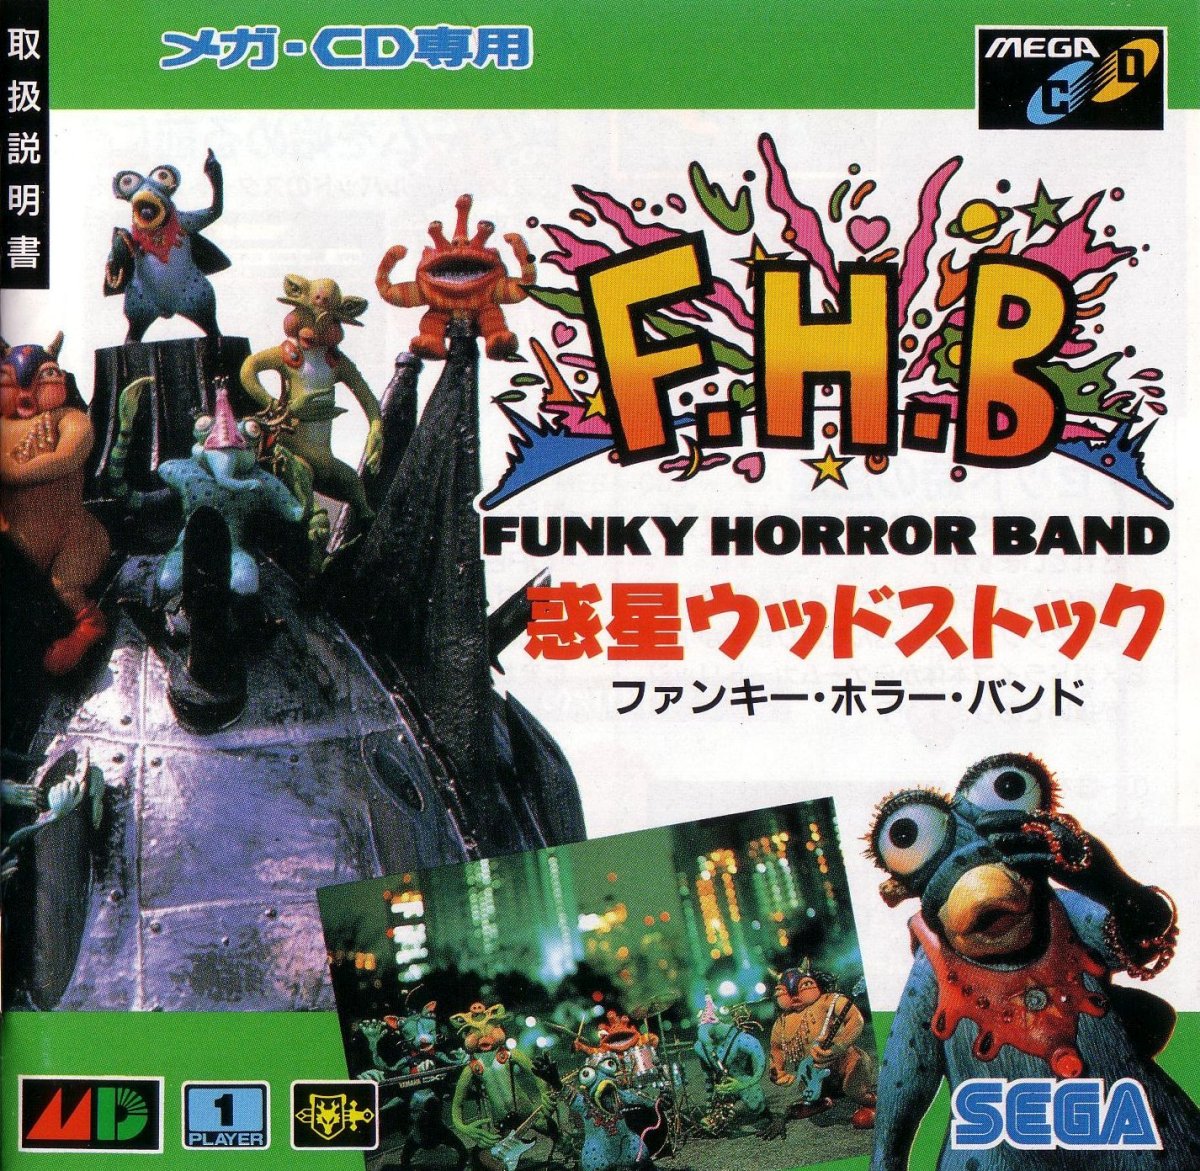 Capa do jogo Wakusei Woodstock: Funky Horror Band